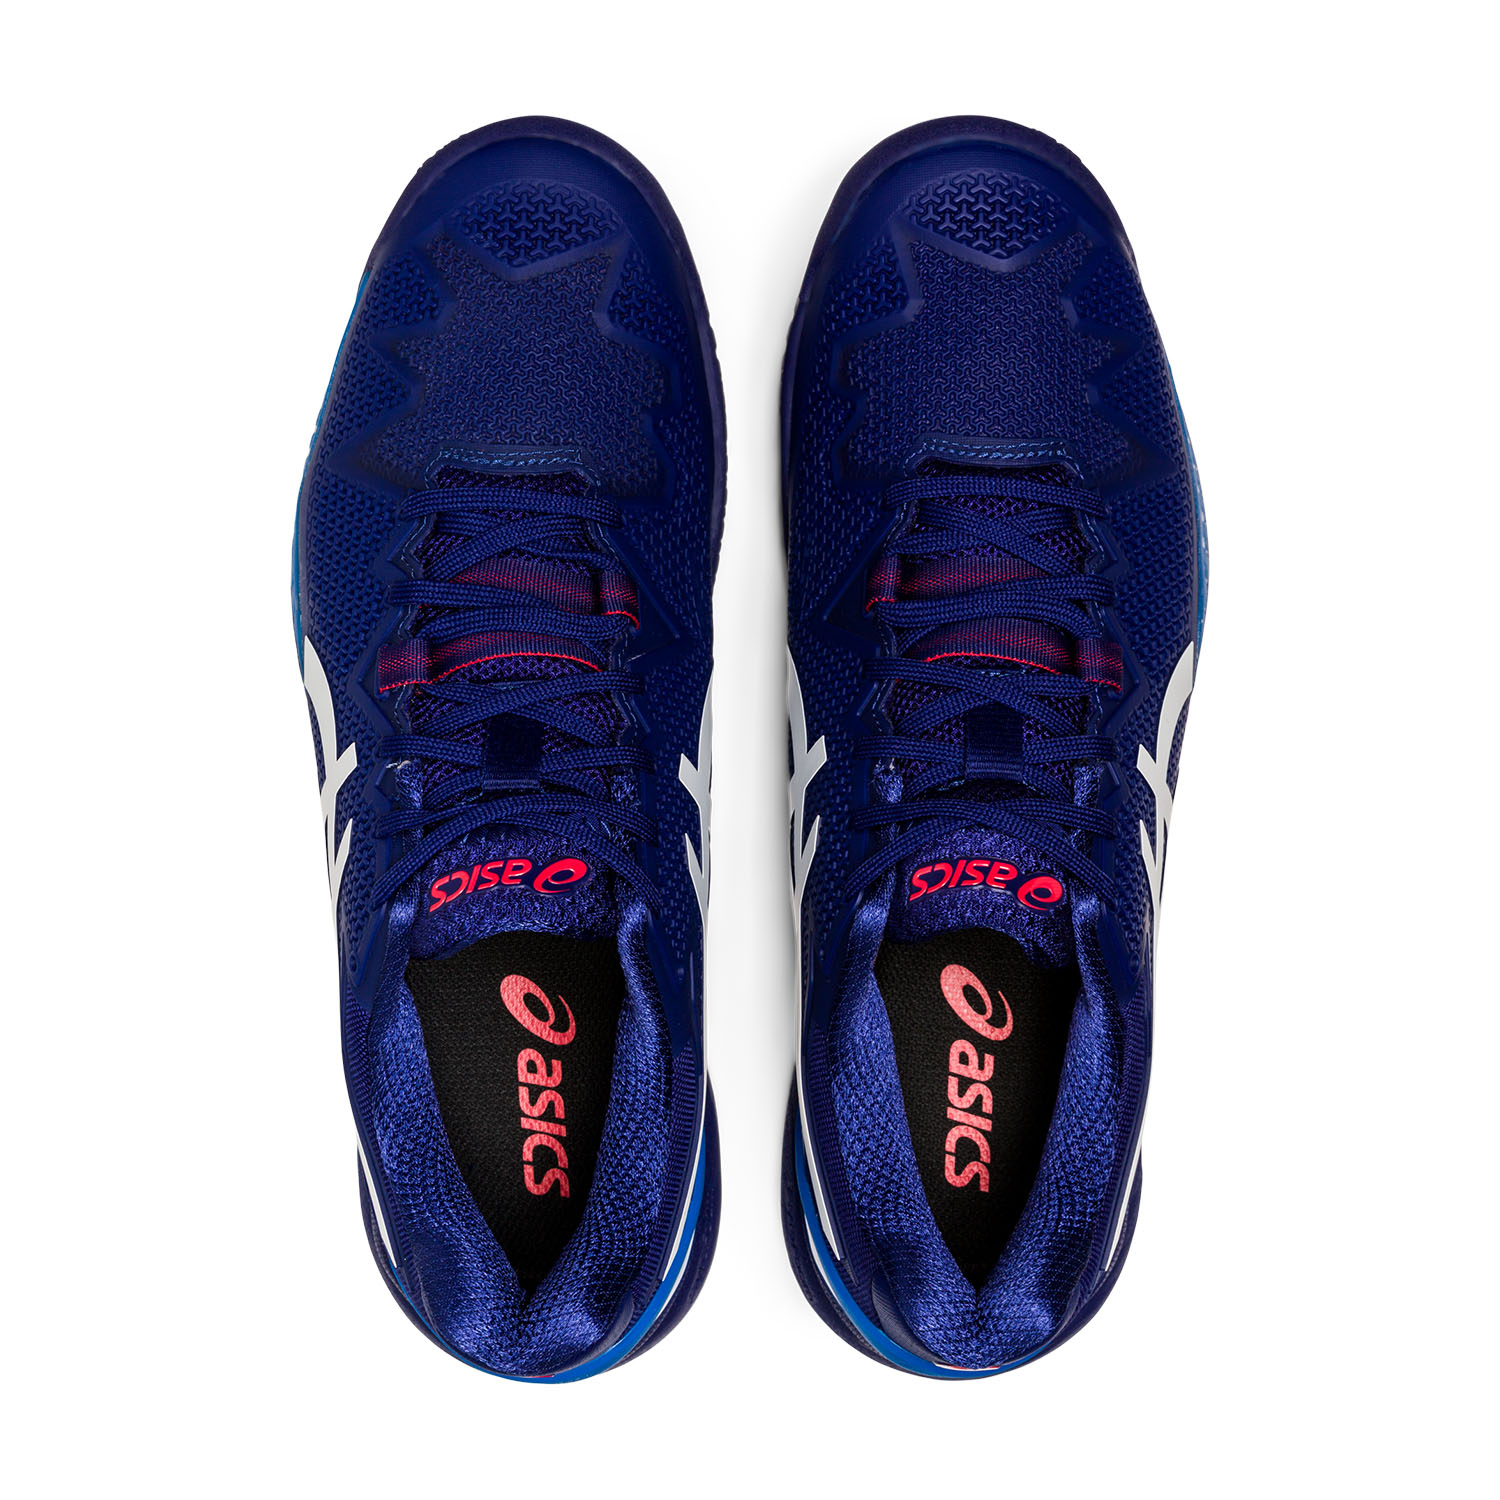 Asics Gel Resolution 8 Men's Tennis Shoes - Dive Blue/White